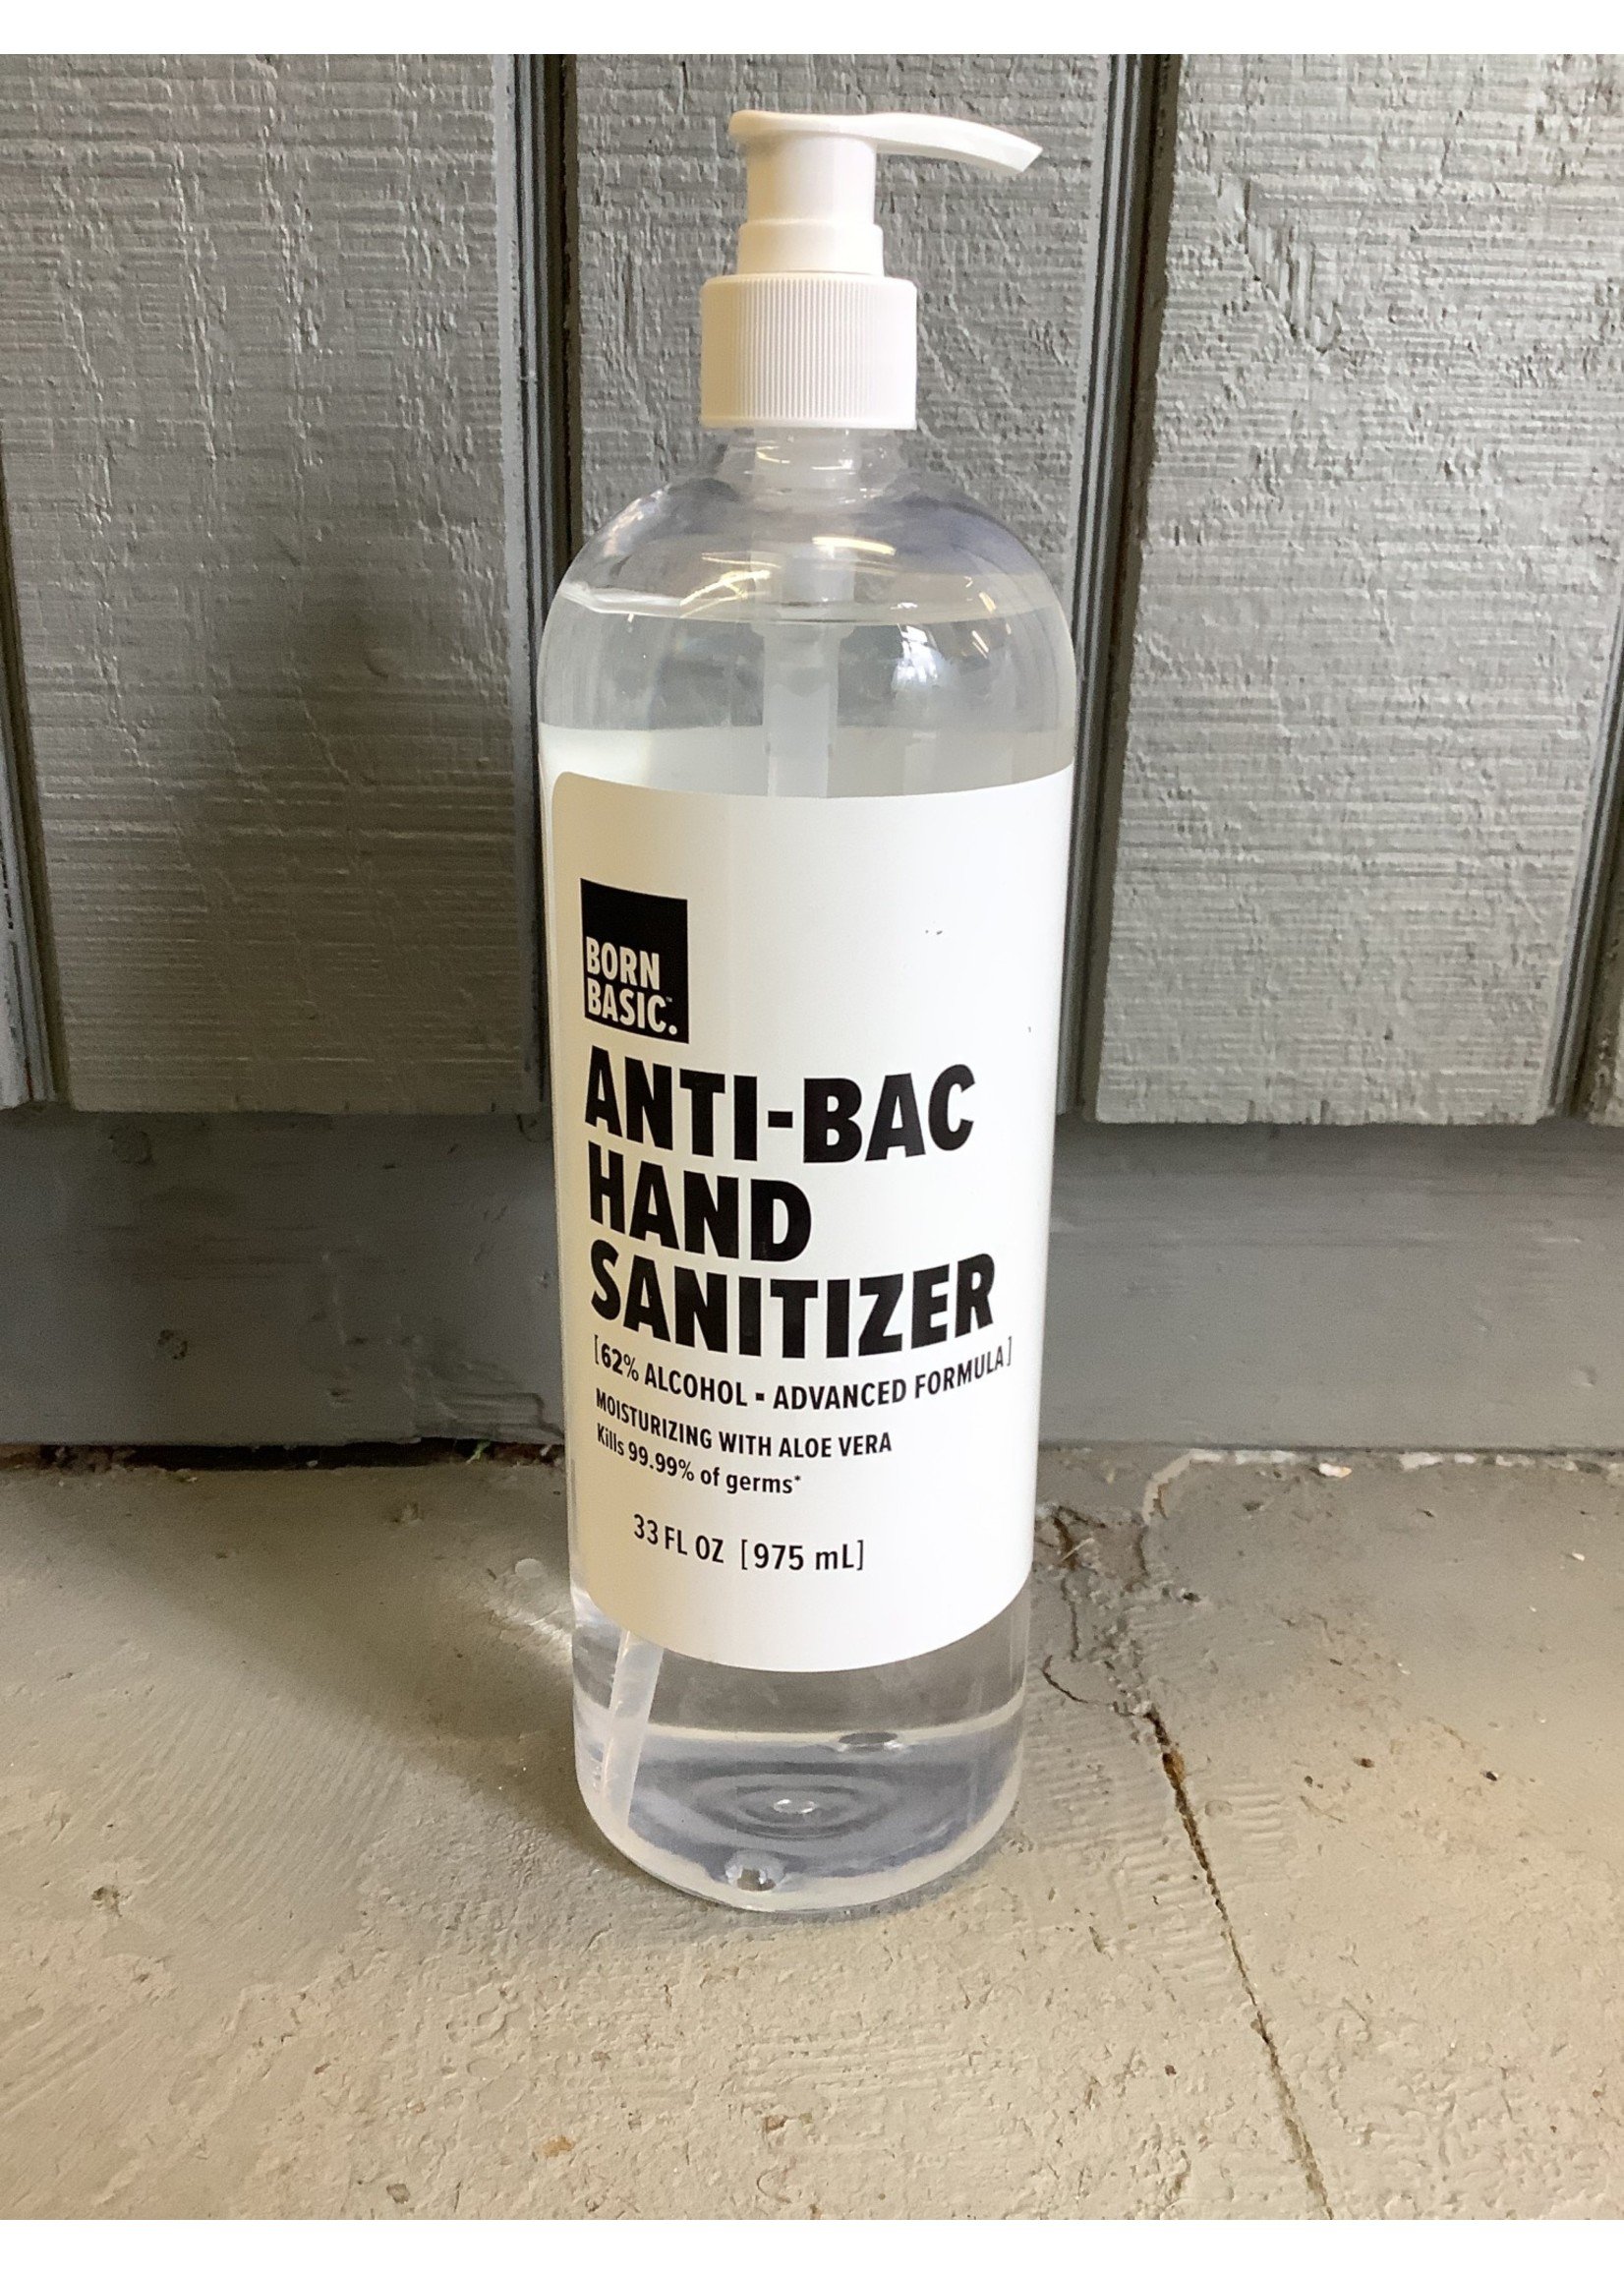 Born Basic Anti-Bac Hand Sanitizer - 33 fl oz